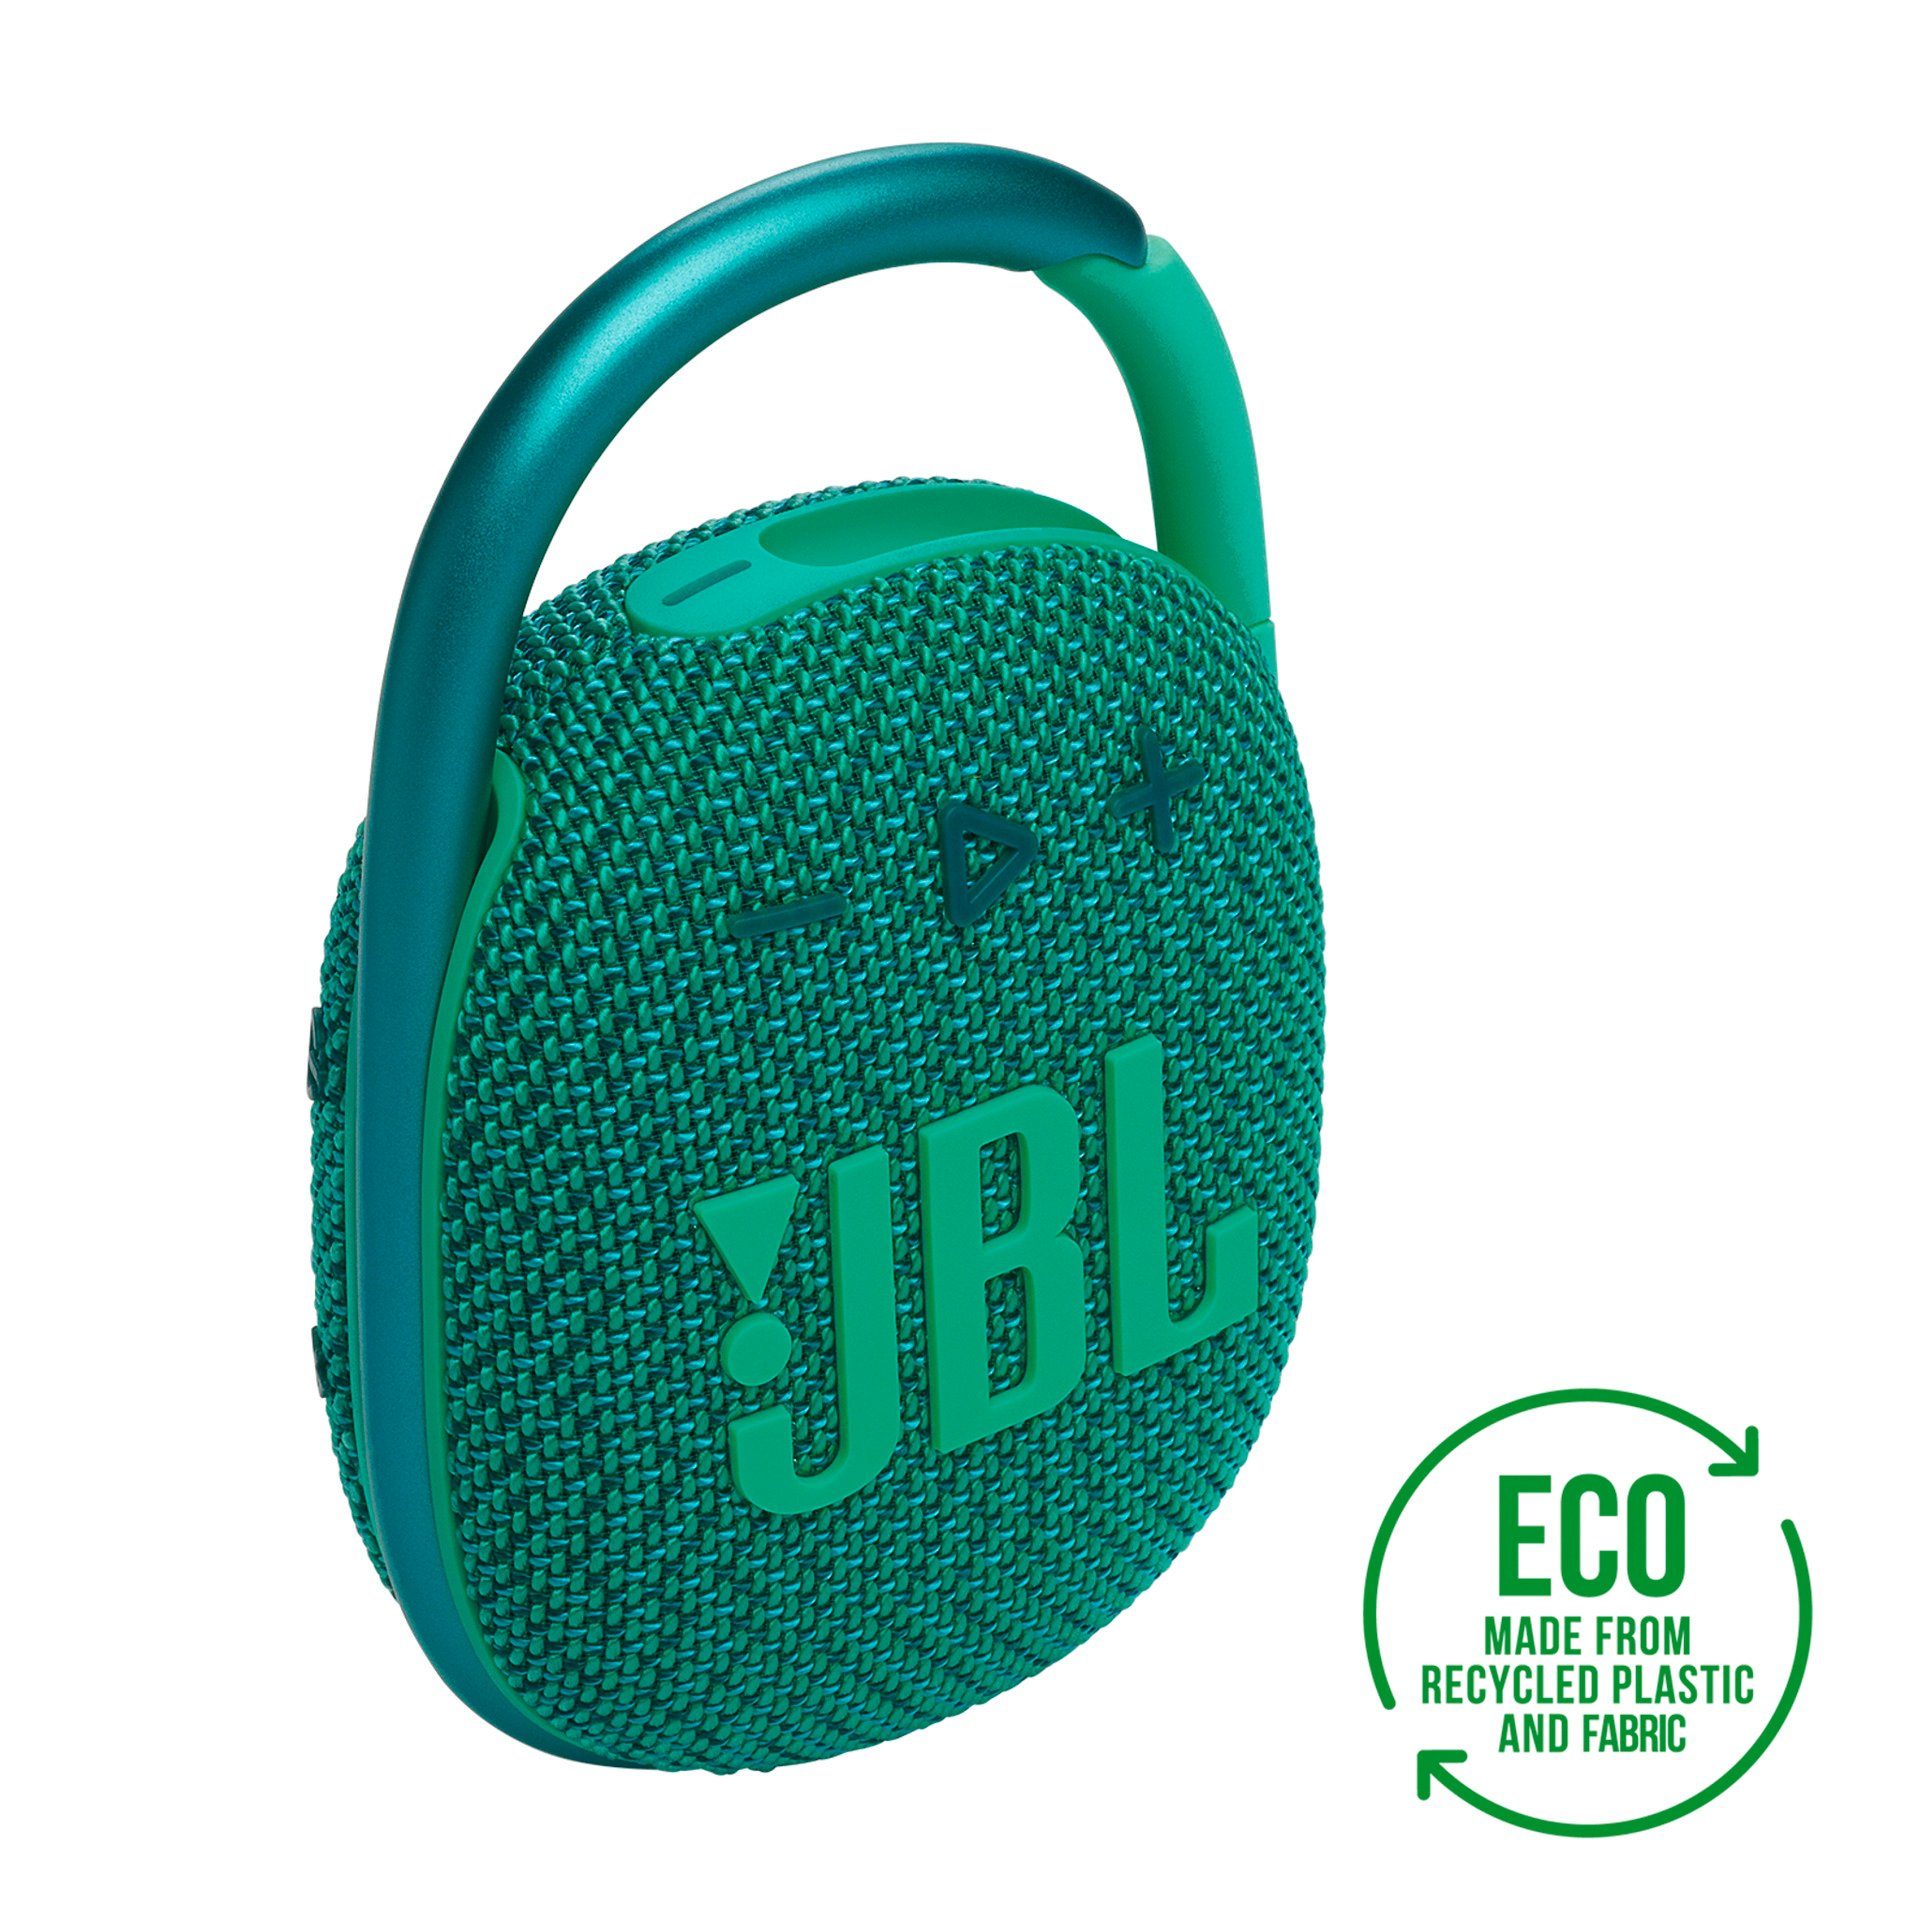 JBL Clip 4 ECO Bluetooth-Lautsprecher (Bluetooth, 5 W)